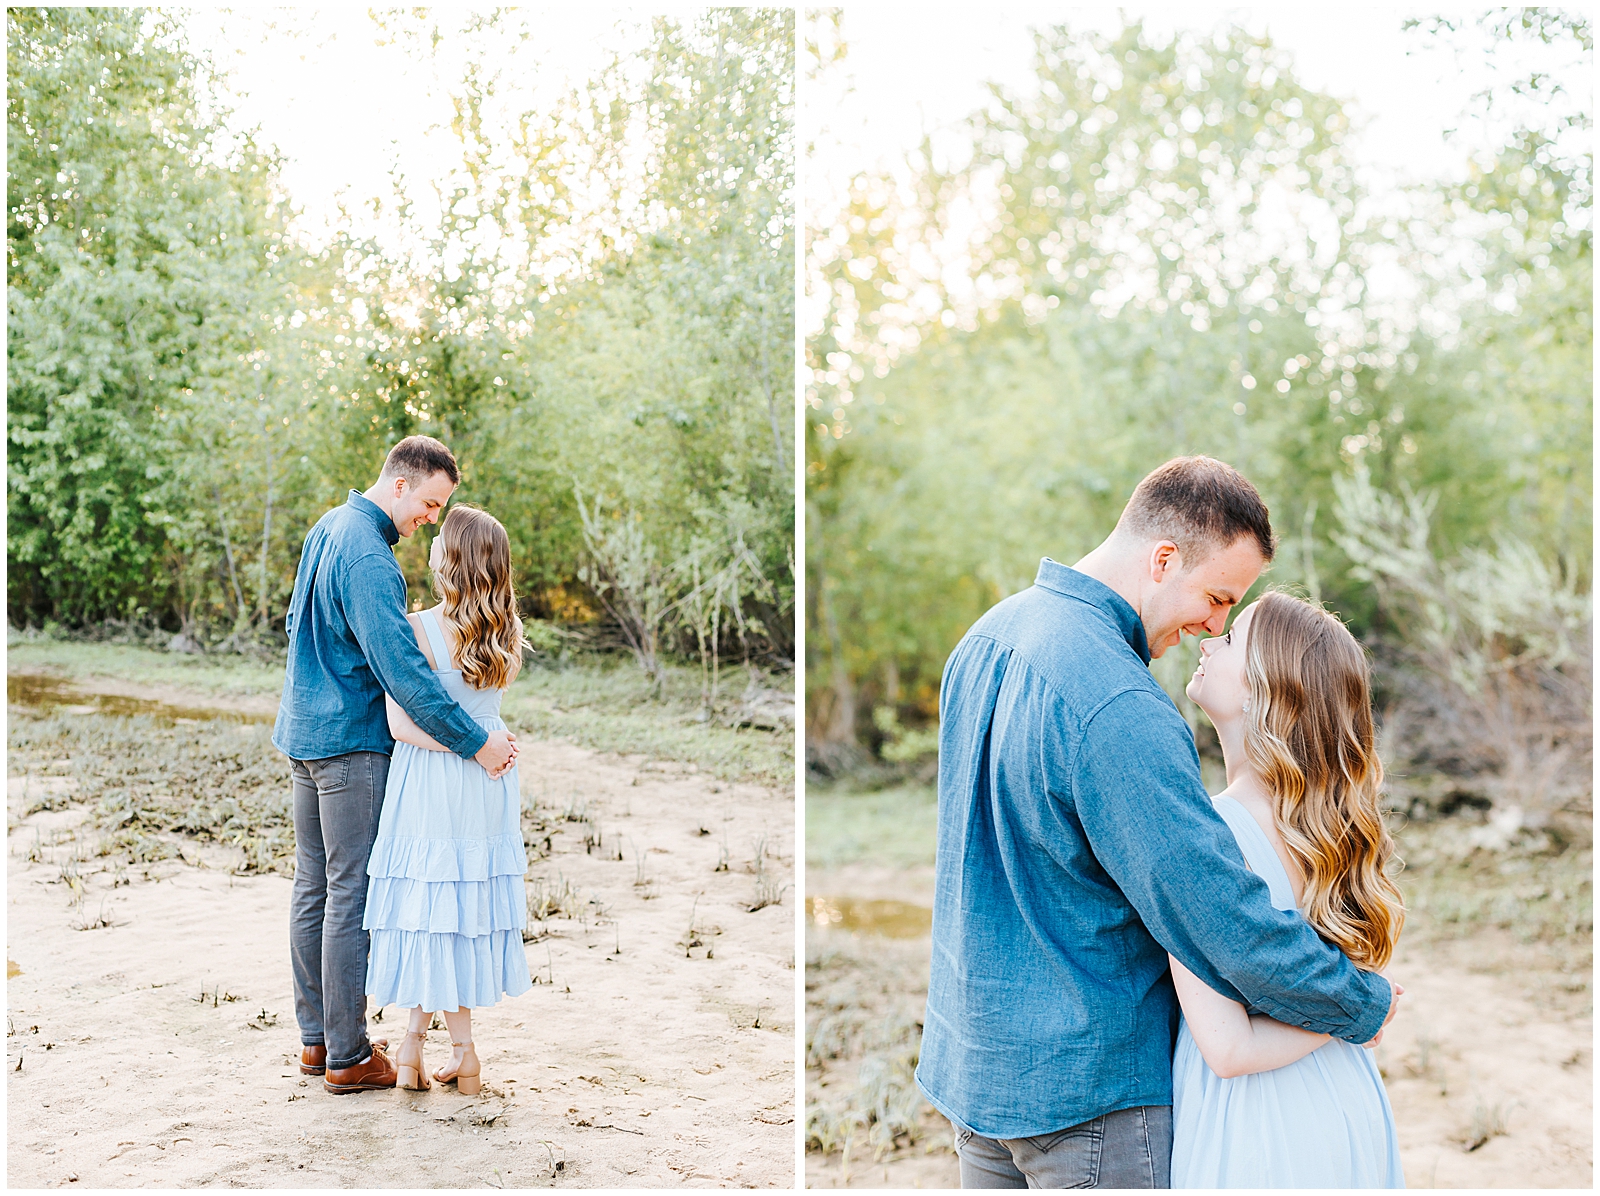 Engagement Session in Boise Idaho by Karli Elliott Photography